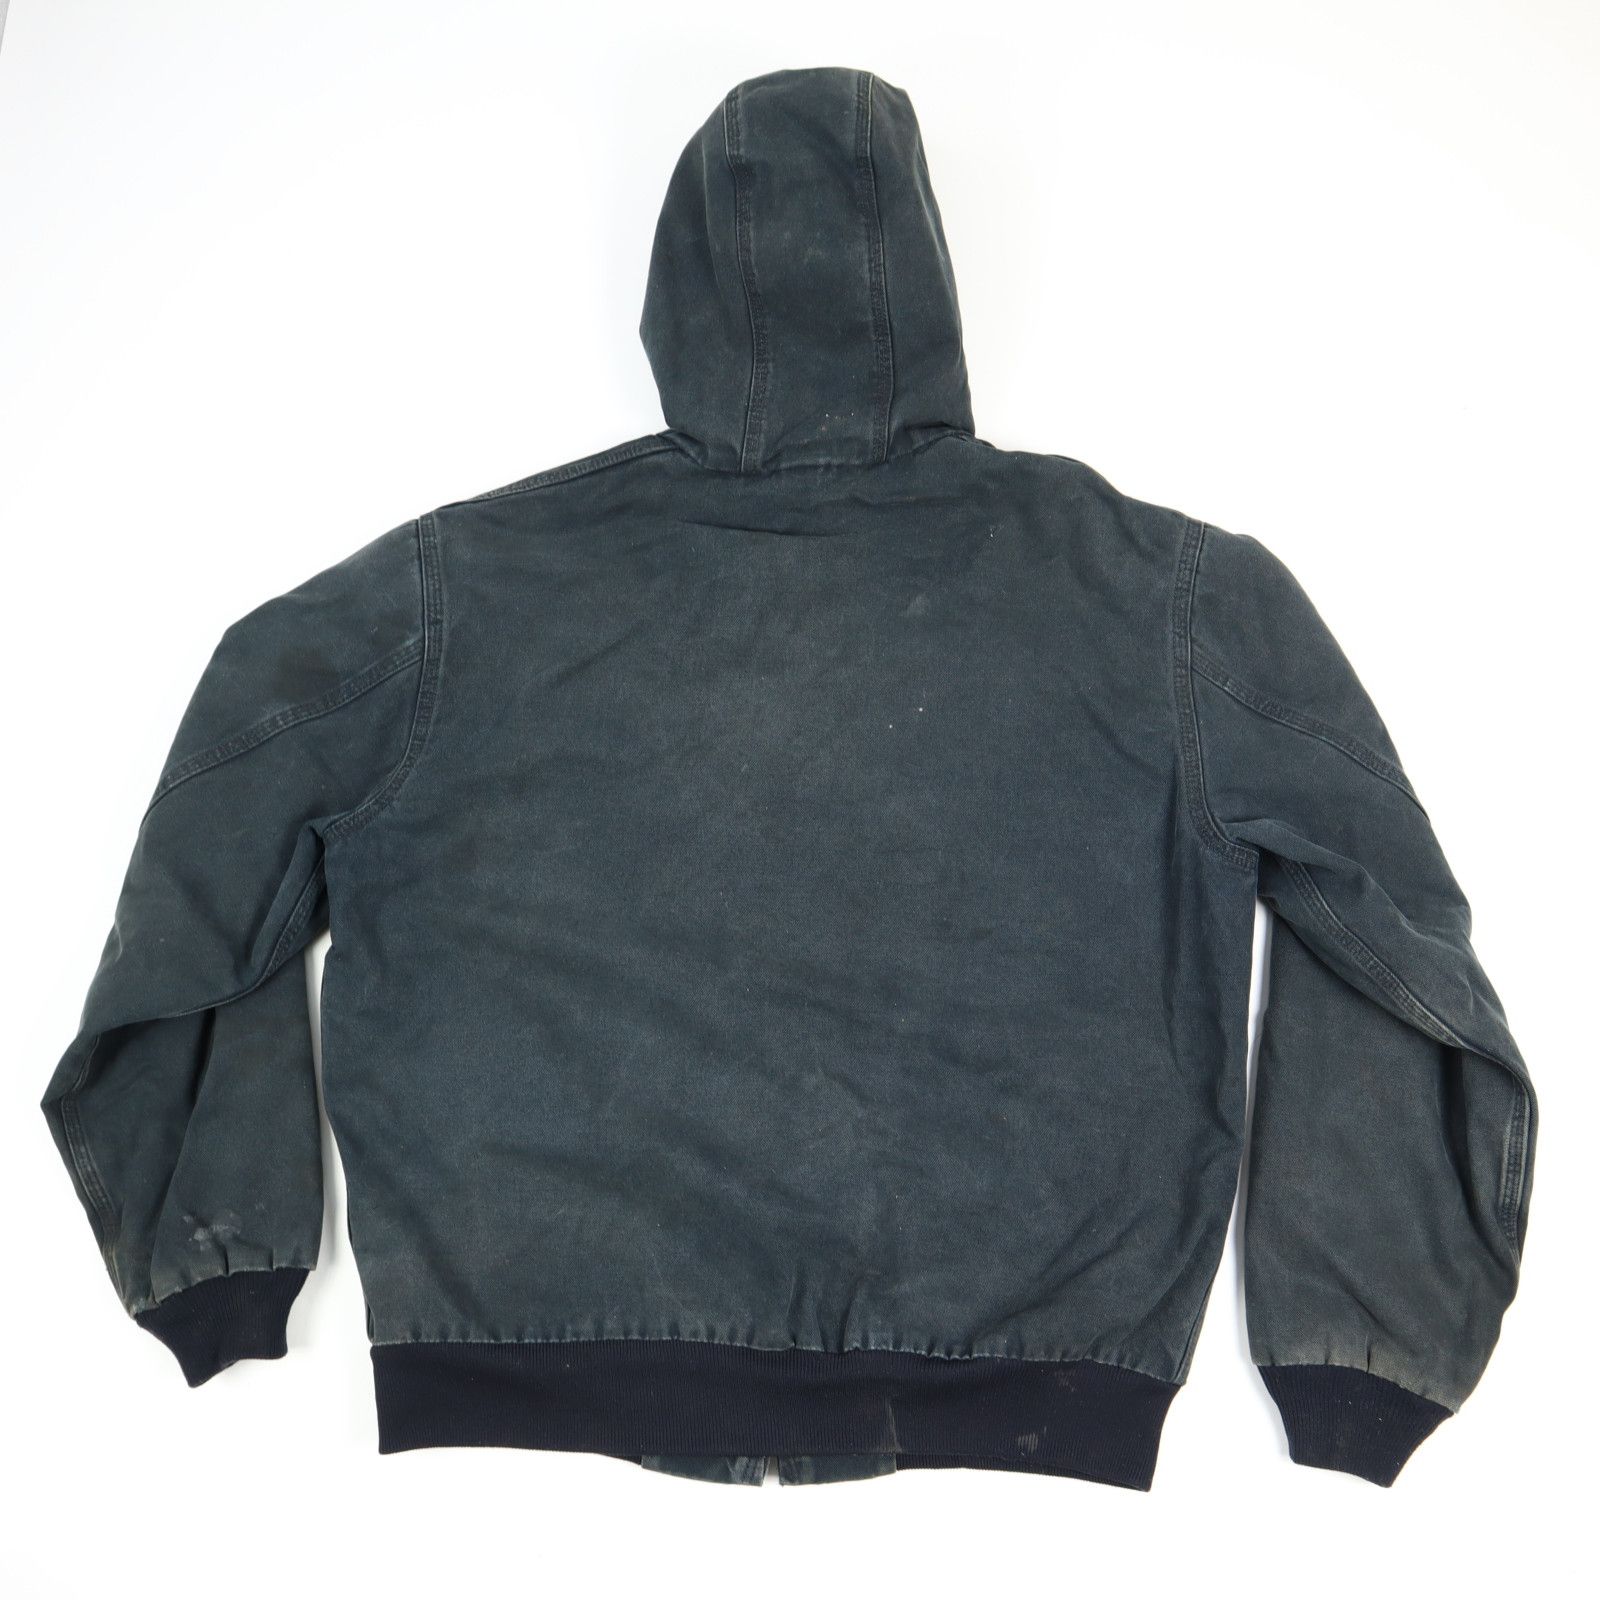 Carhartt Black Carhartt Hooded Jacket Size US L / EU 52-54 / 3 - 2 Preview